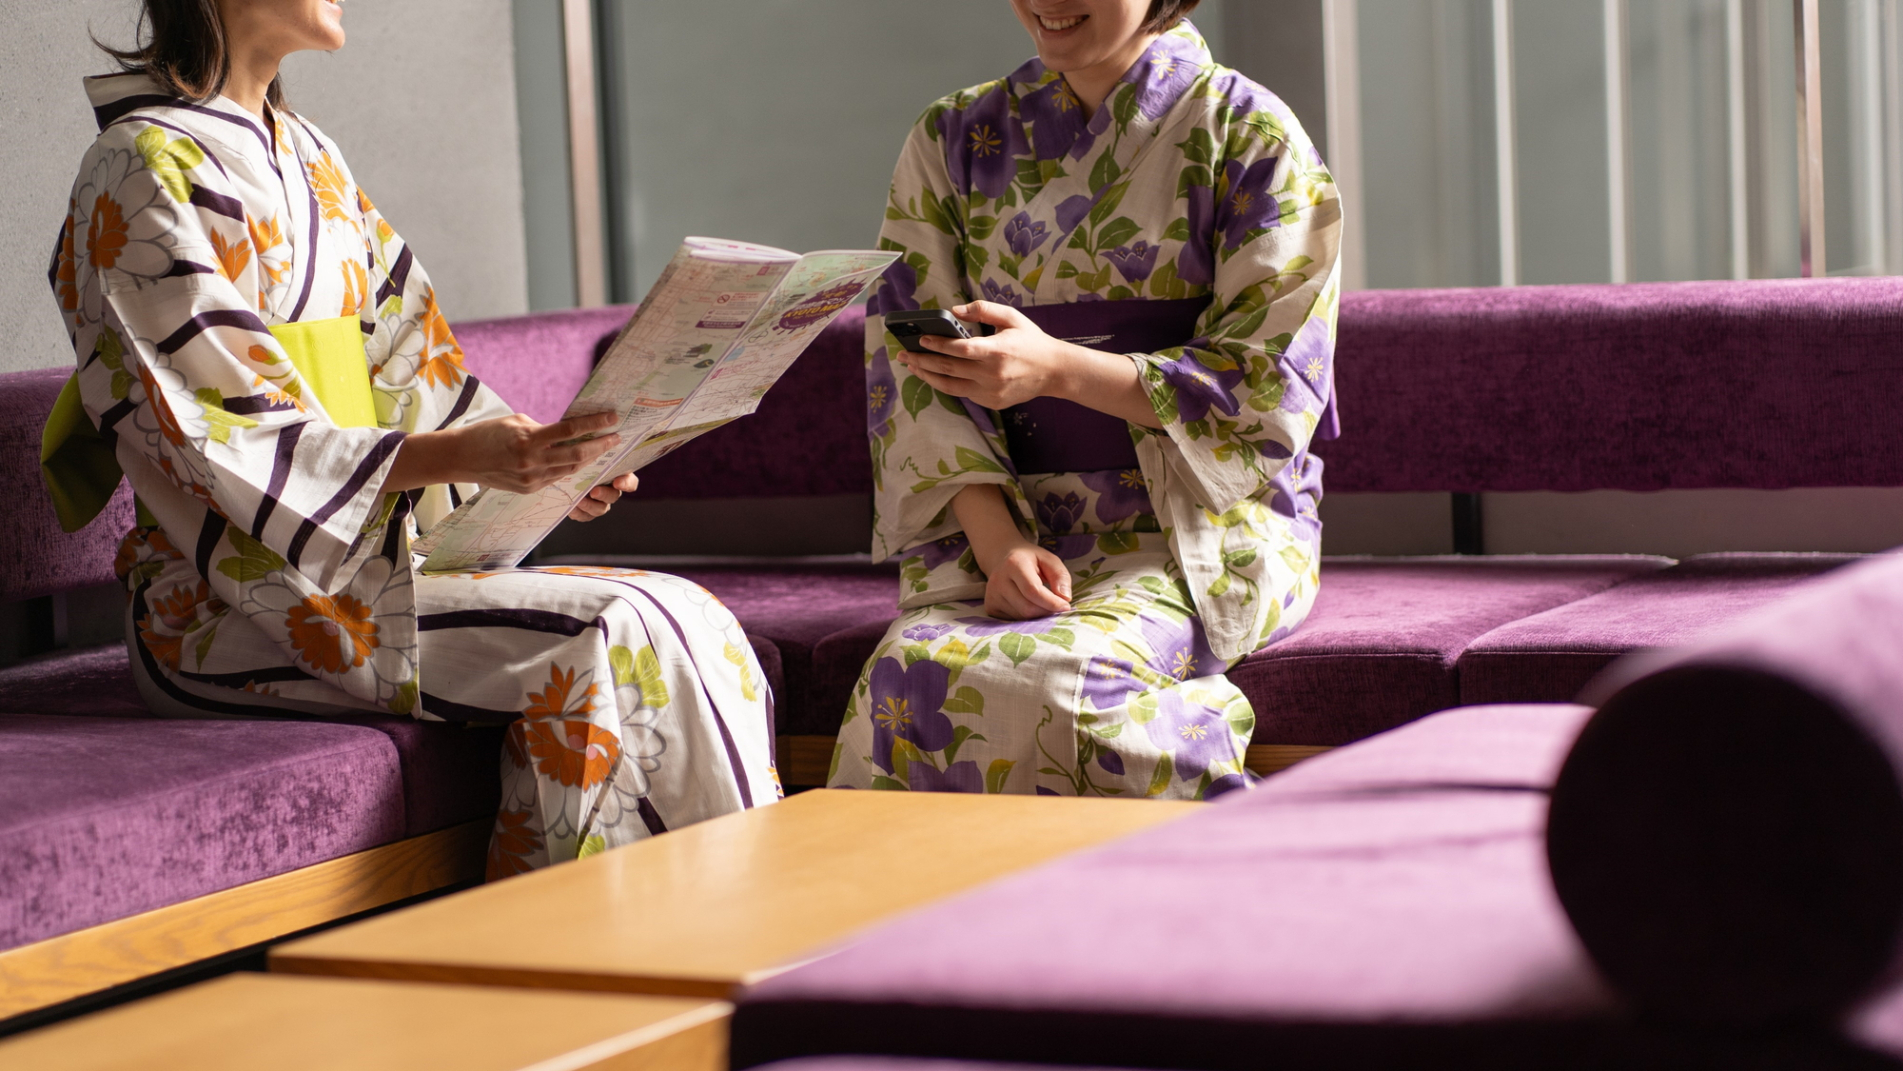 Two women in yukata chatting in the lobby